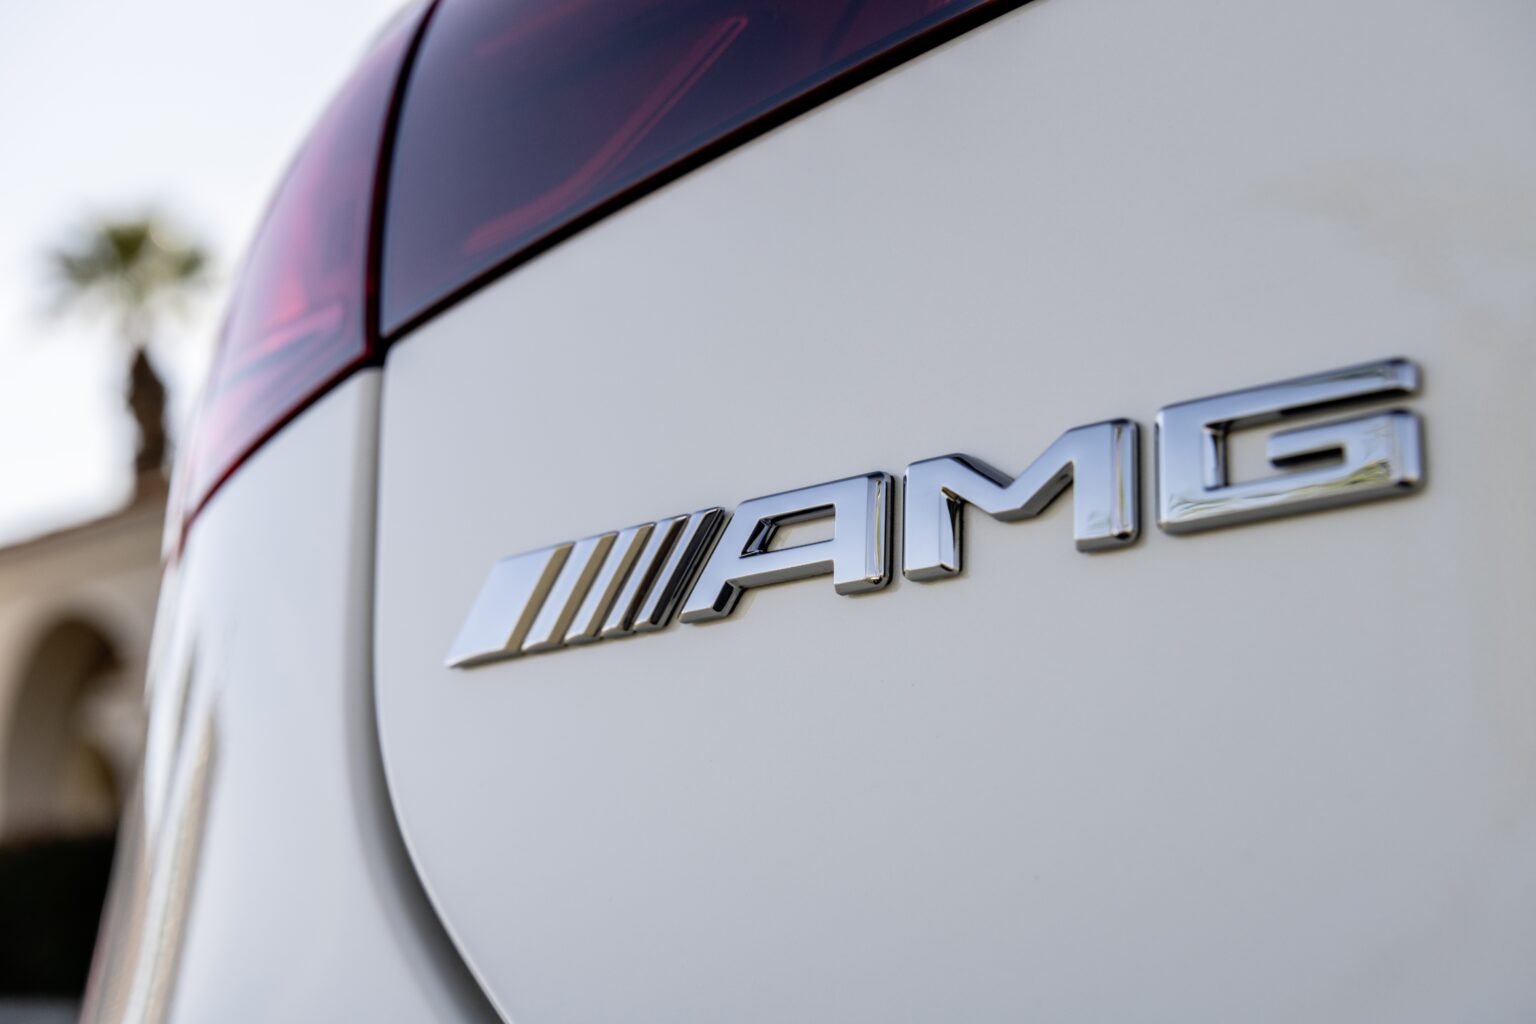 2023 Mercedes AMG EQS Exterior Image 18